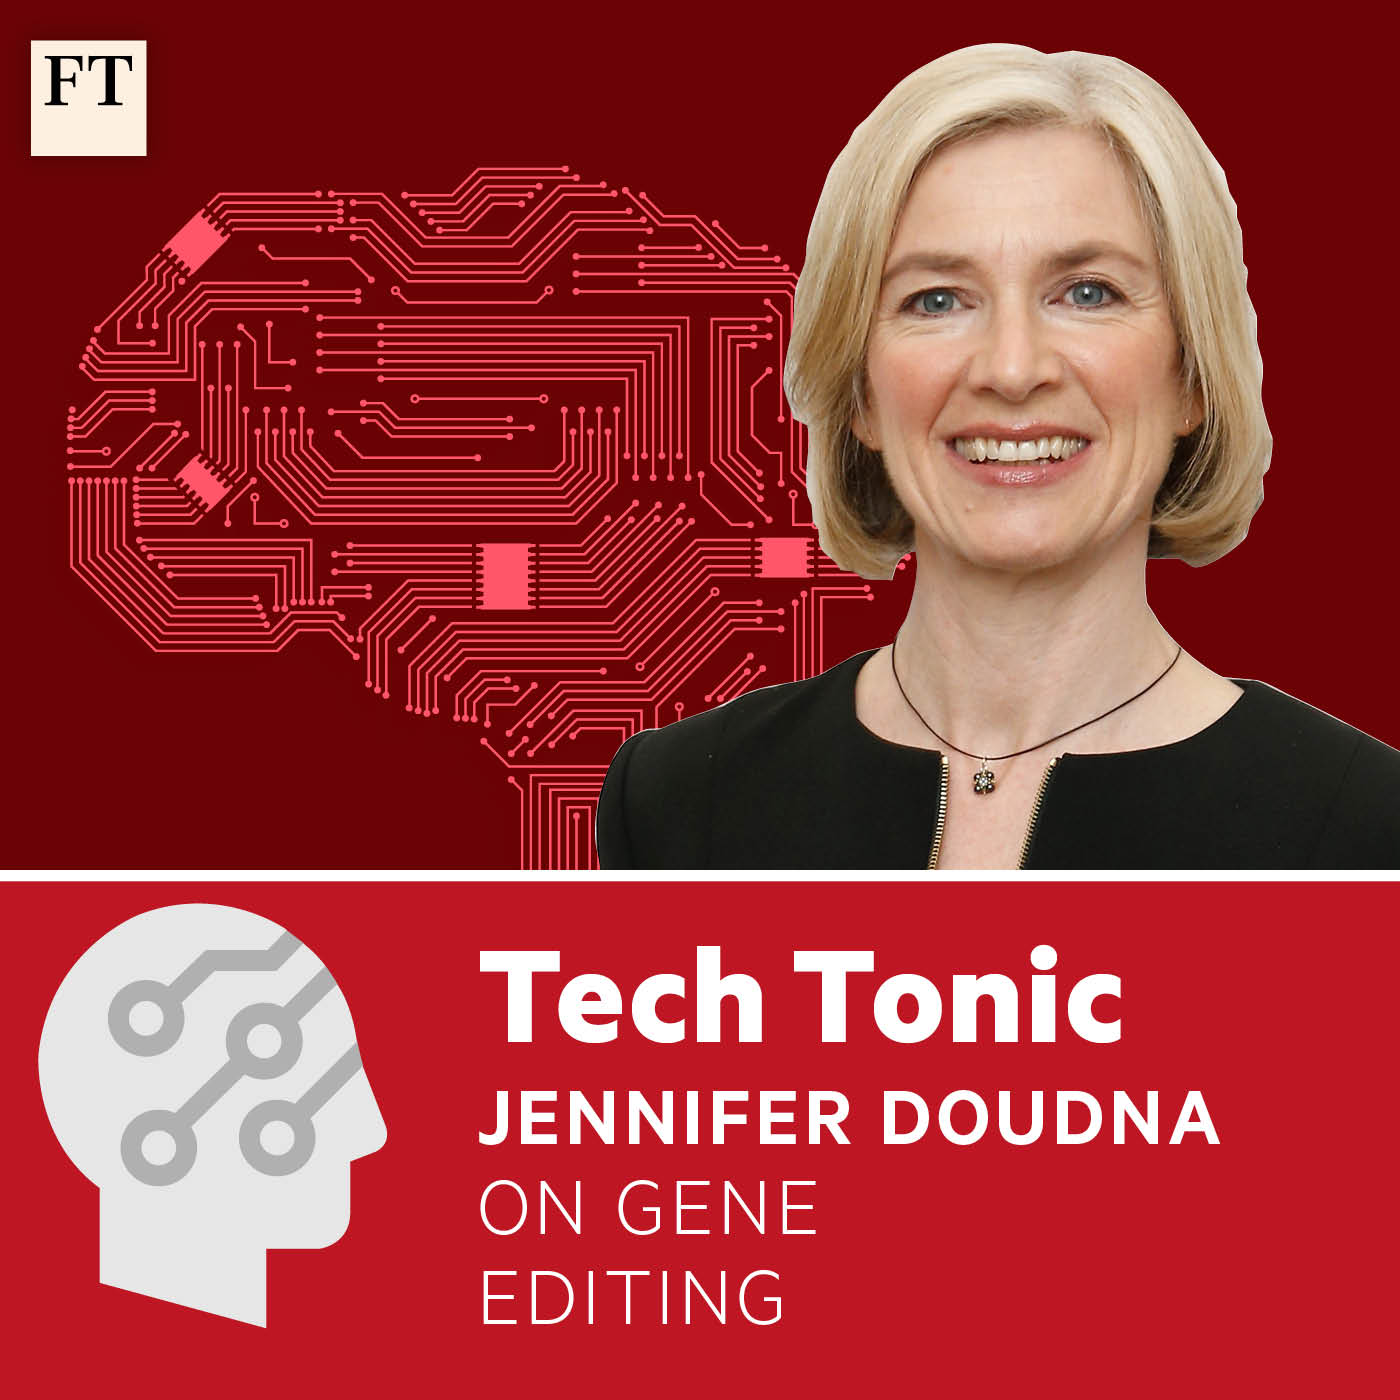 Jennifer Doudna on gene editing